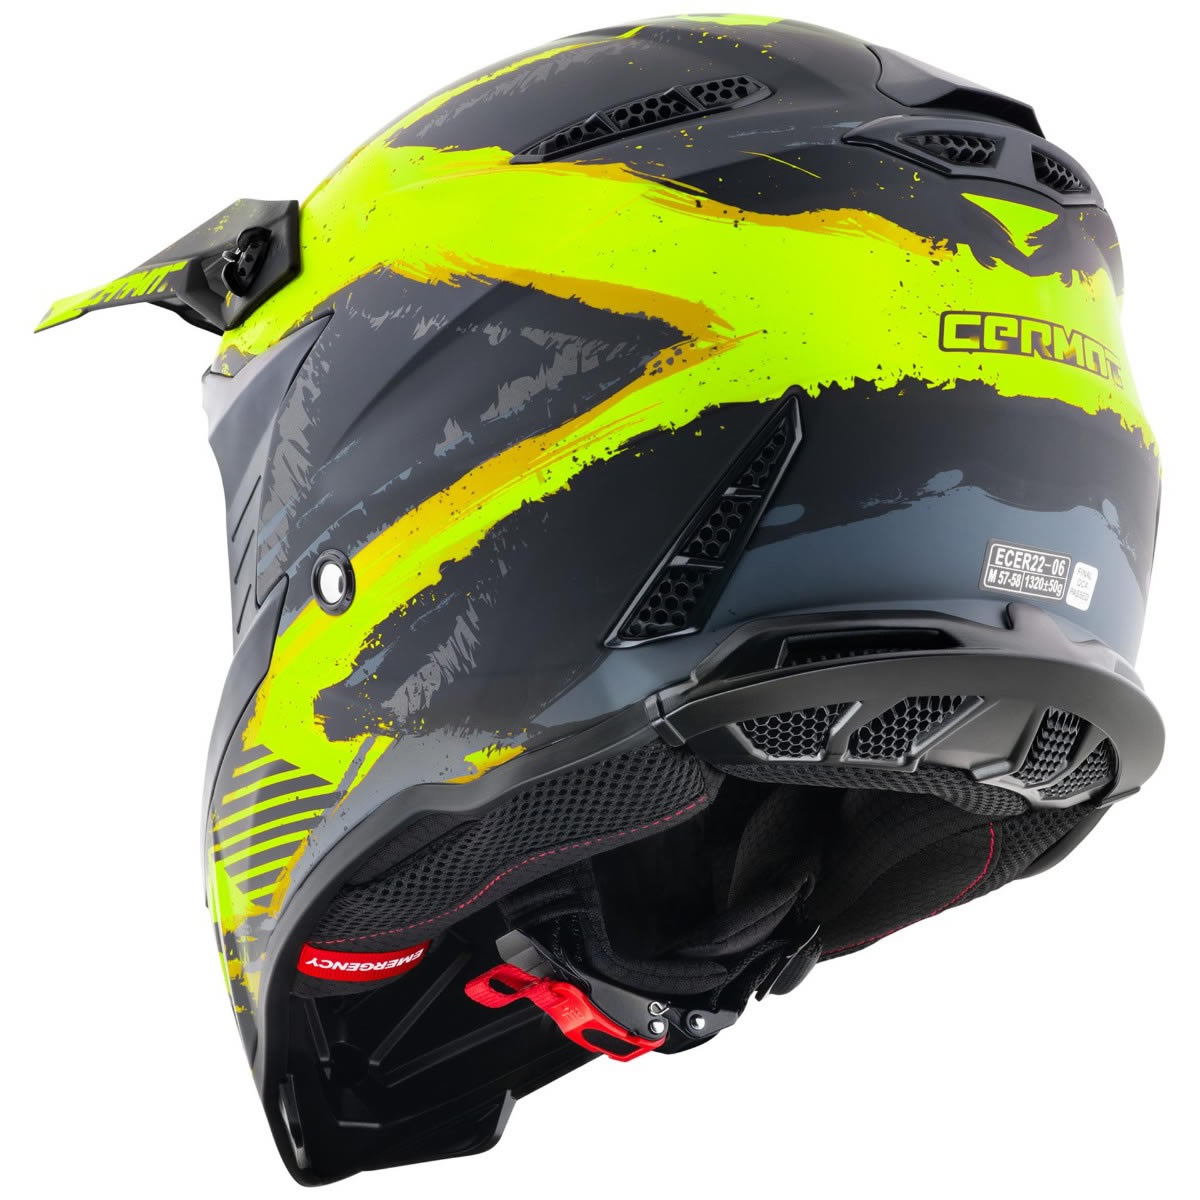 Germot GM 540 Helm, schwarz-fluogelb matt